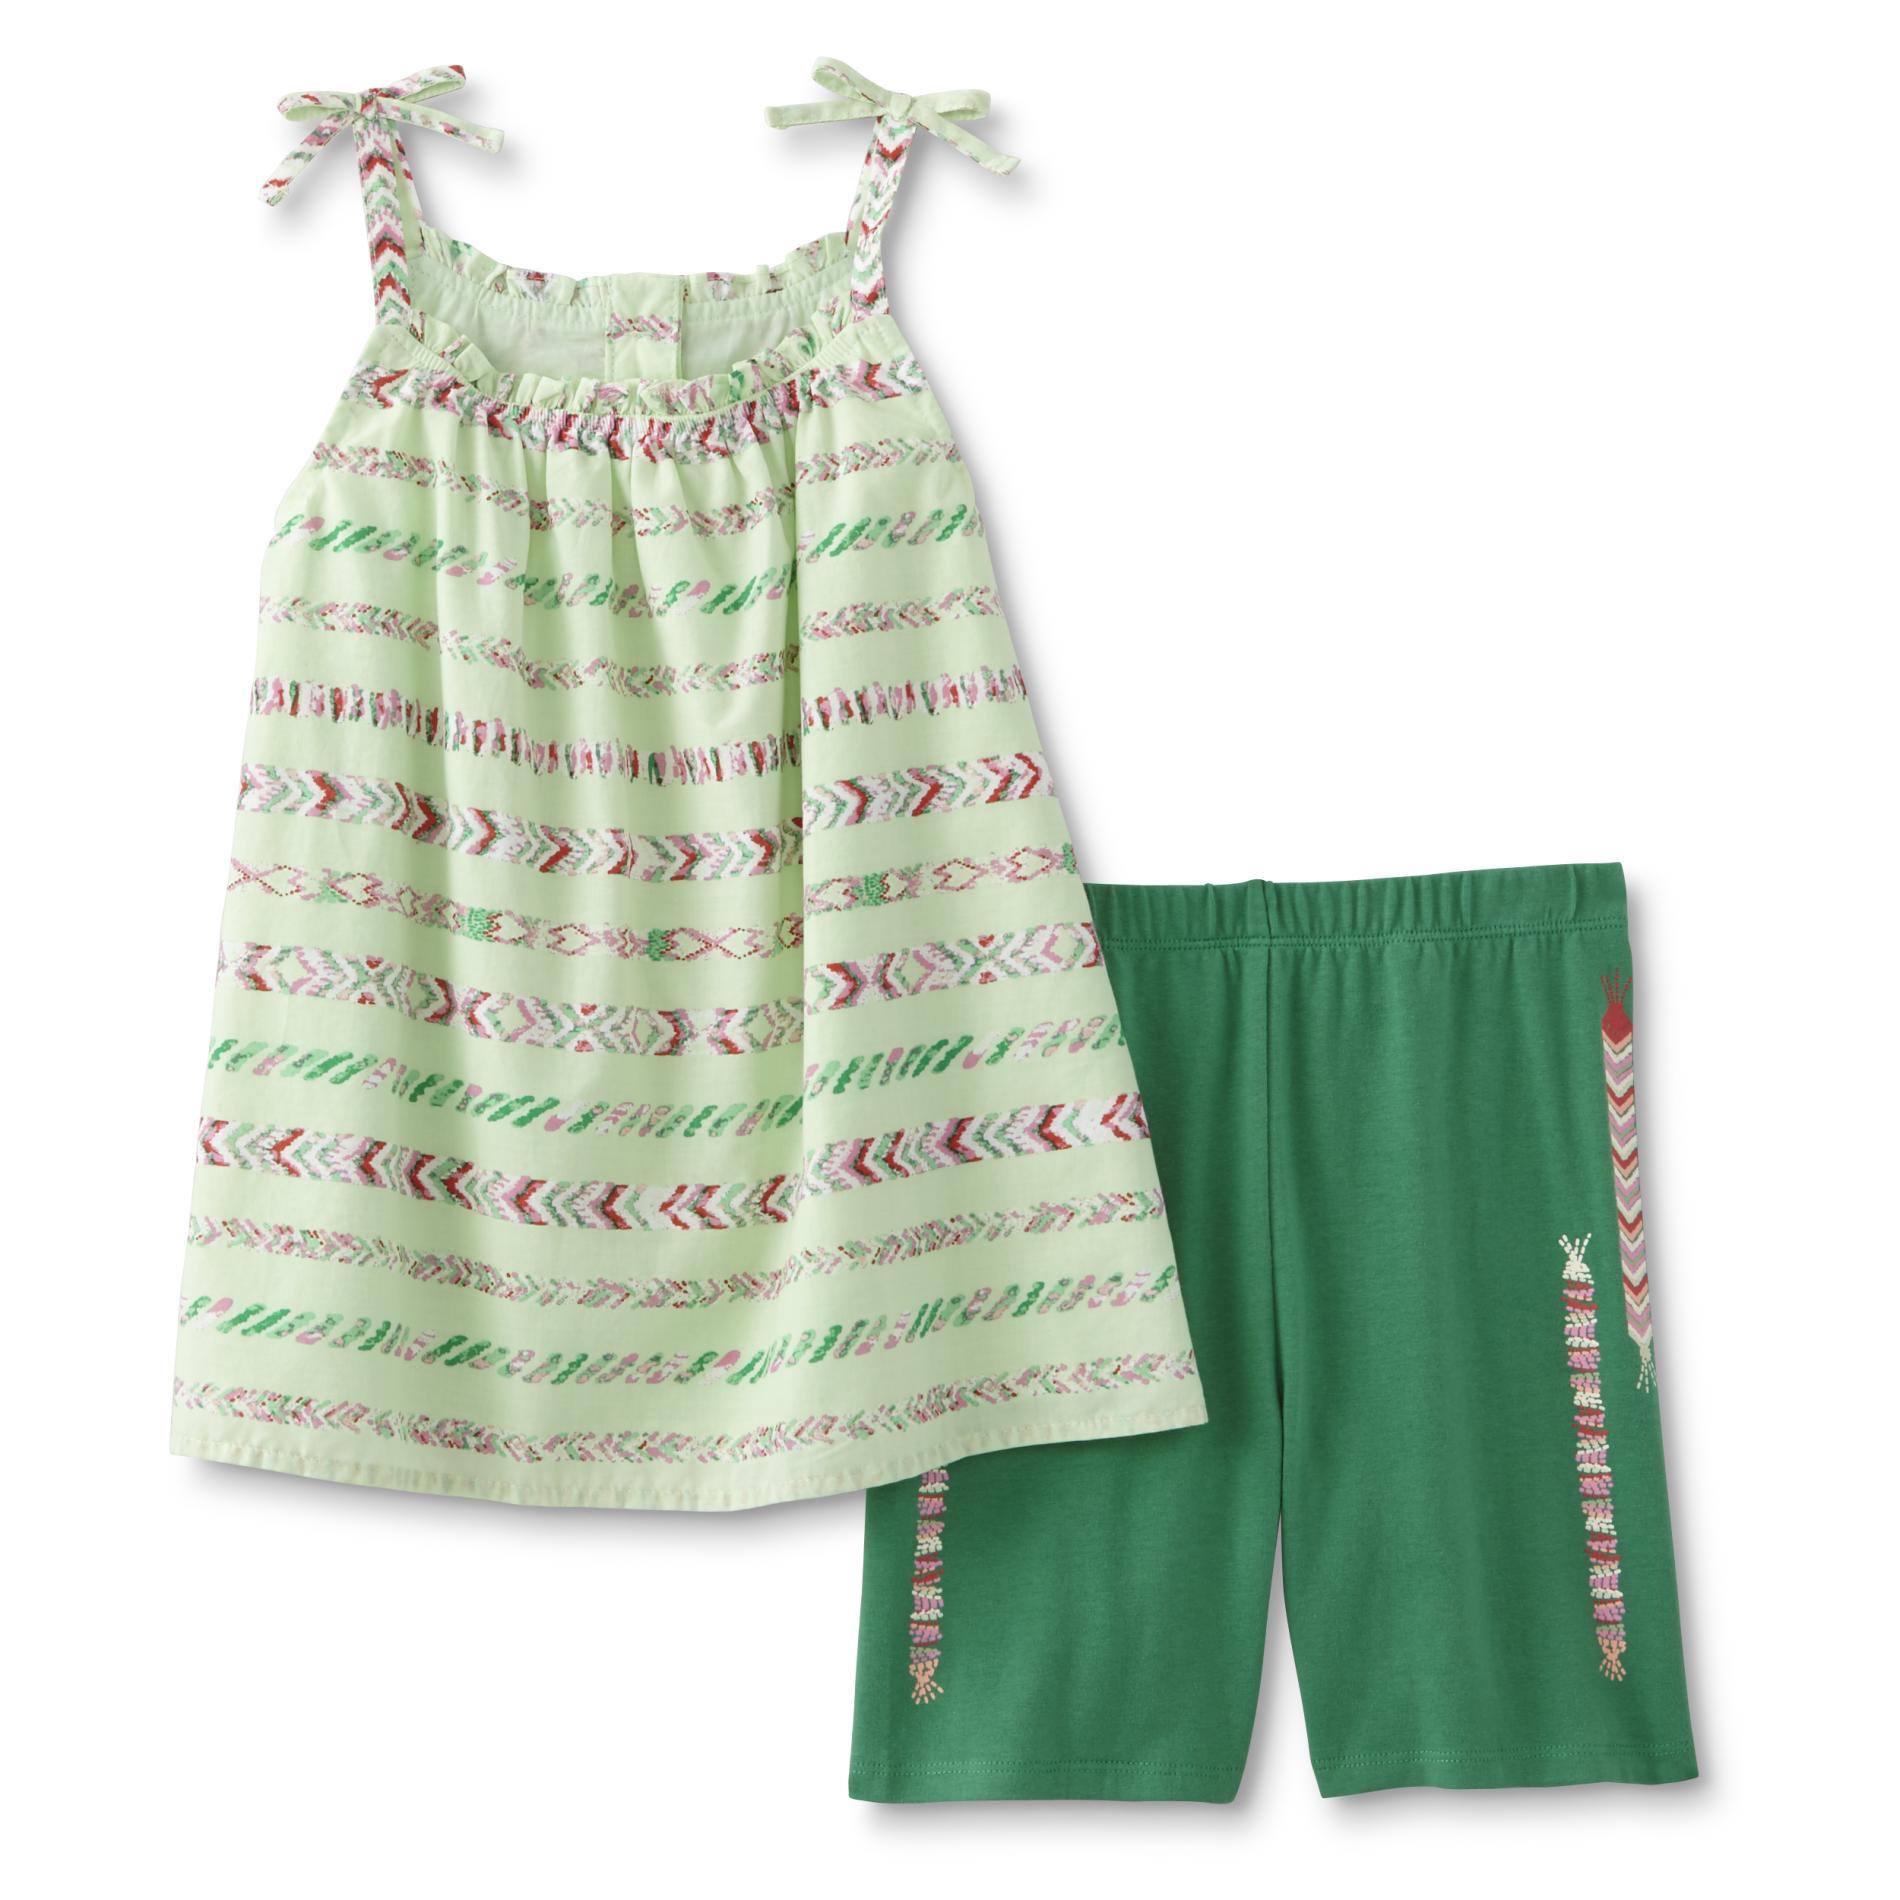 Toughskins Infant & Toddler Girls' Tank Top & Bike Shorts - Friendship Bracelet